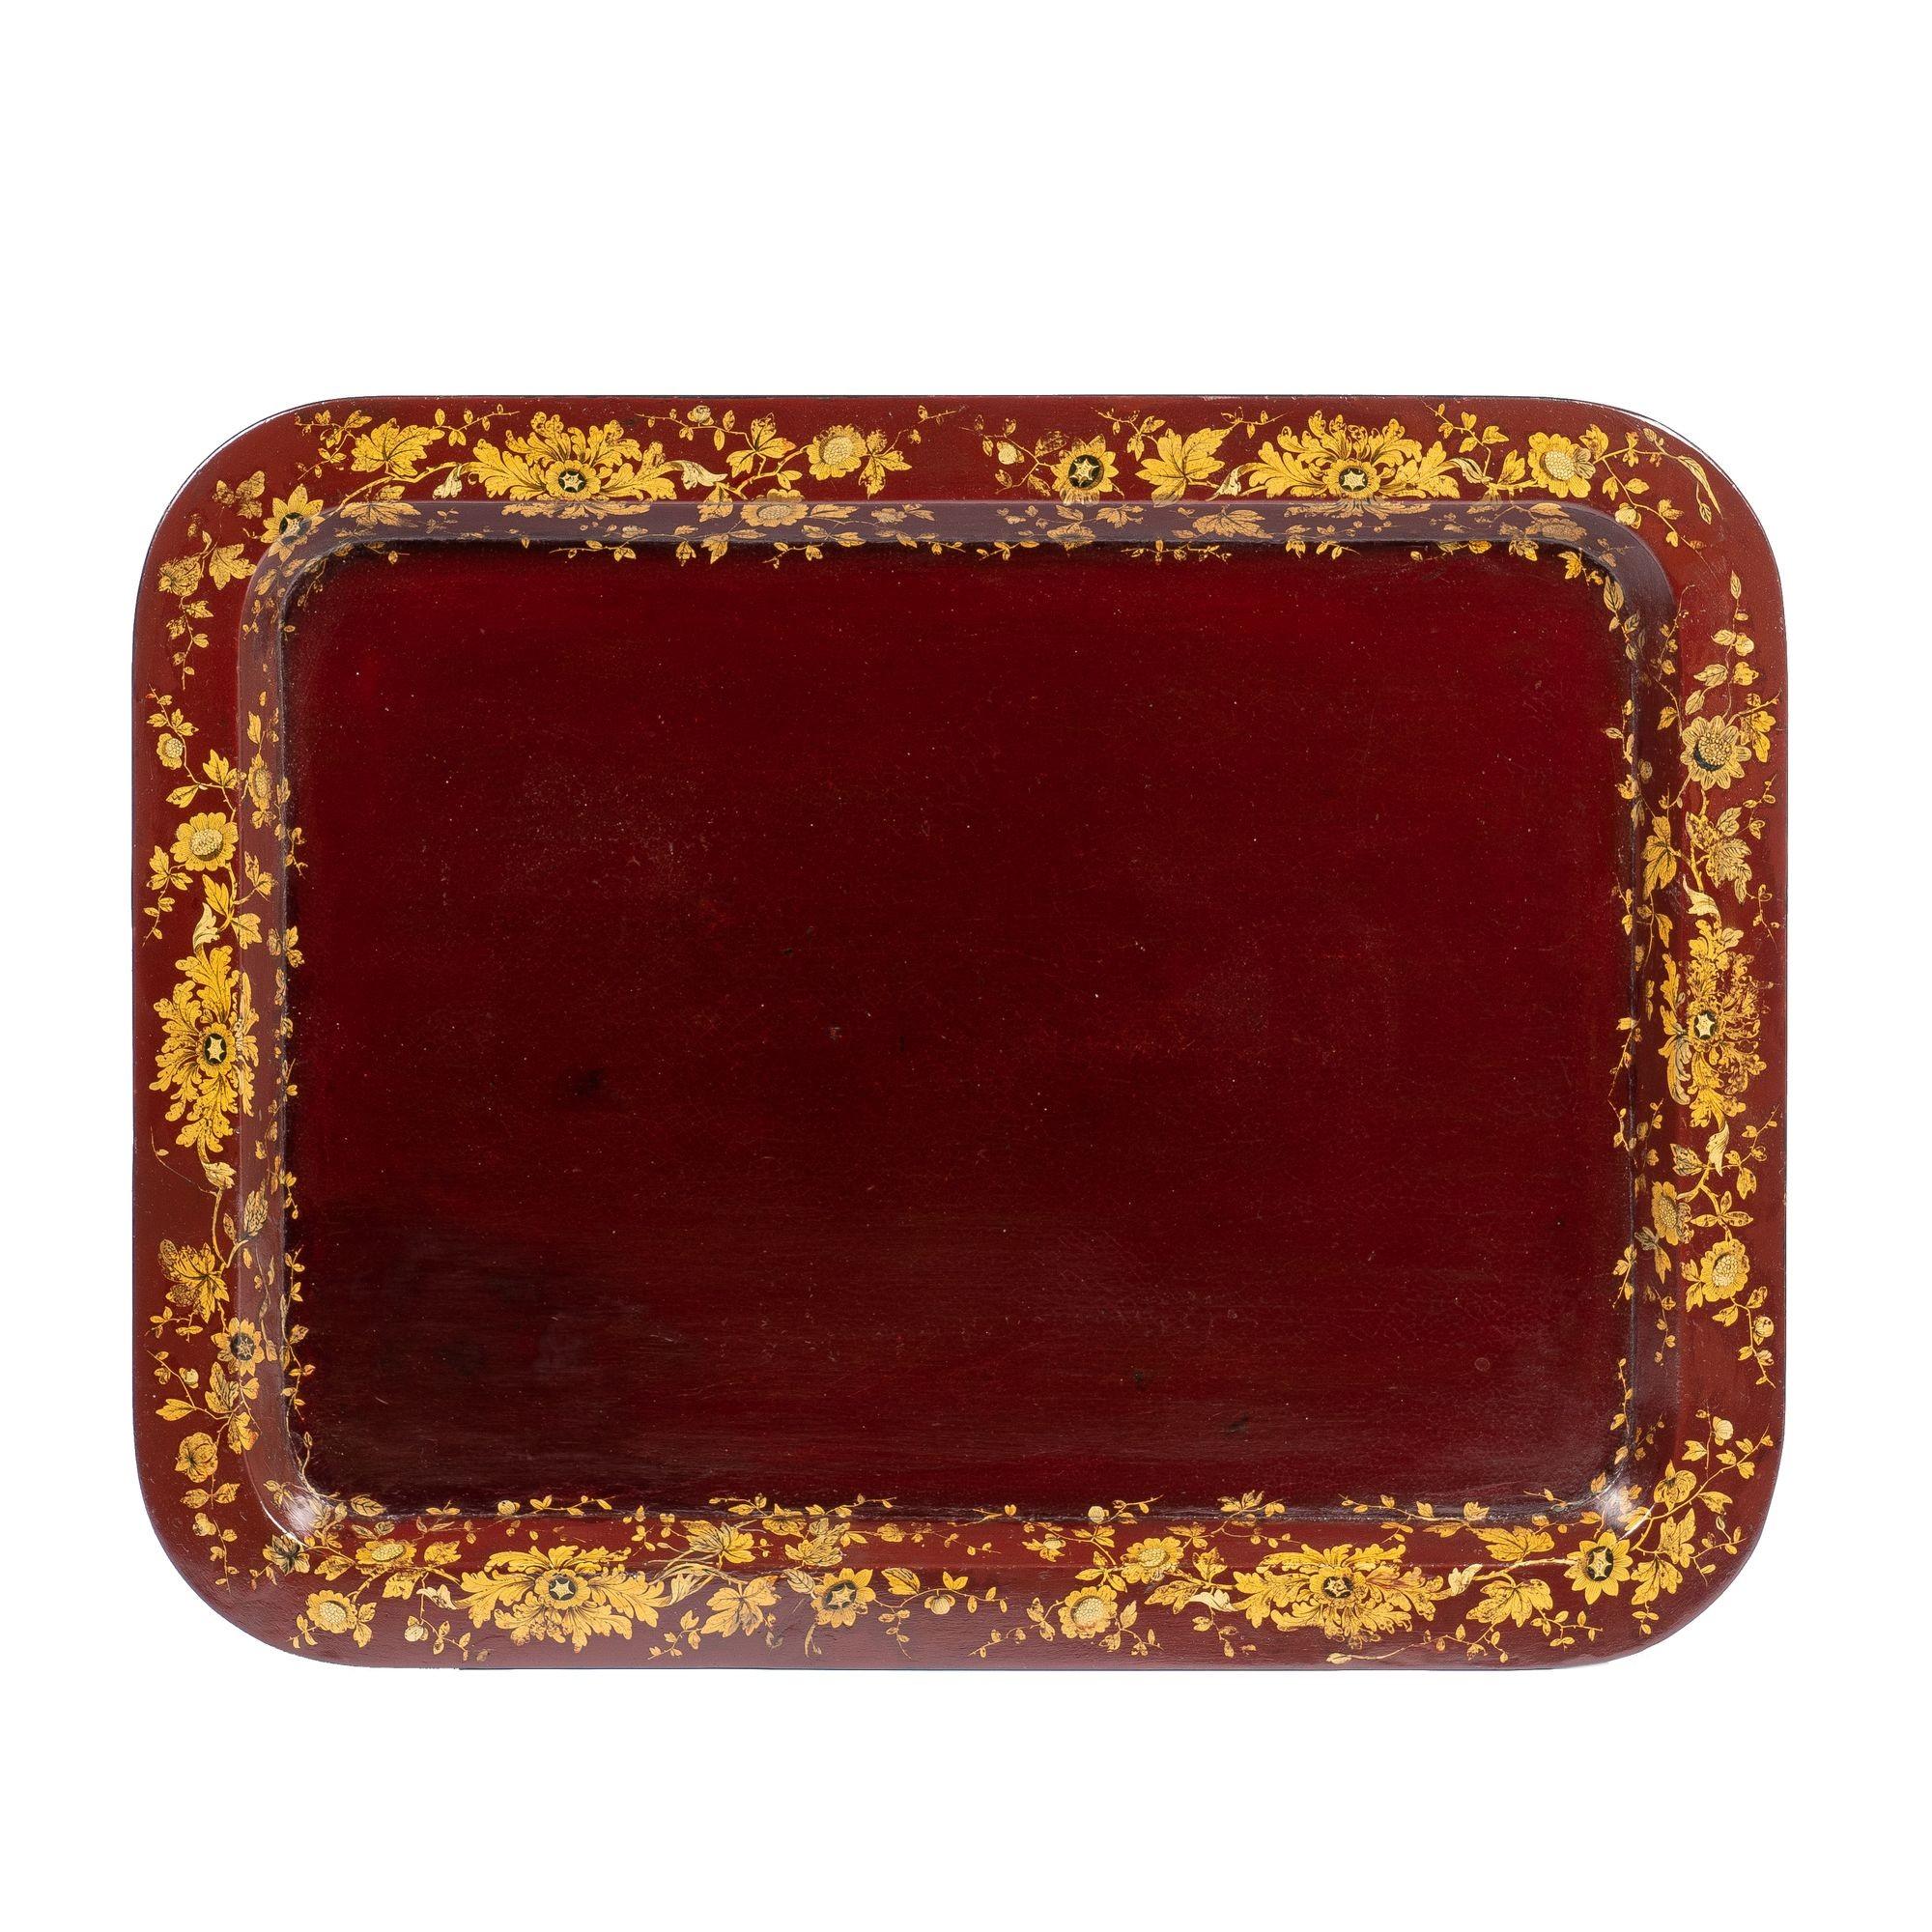 Hardwood English Gilt Decorated Burgundy Paper Mache Tea Tray on Custom Stand, c. 1830 For Sale